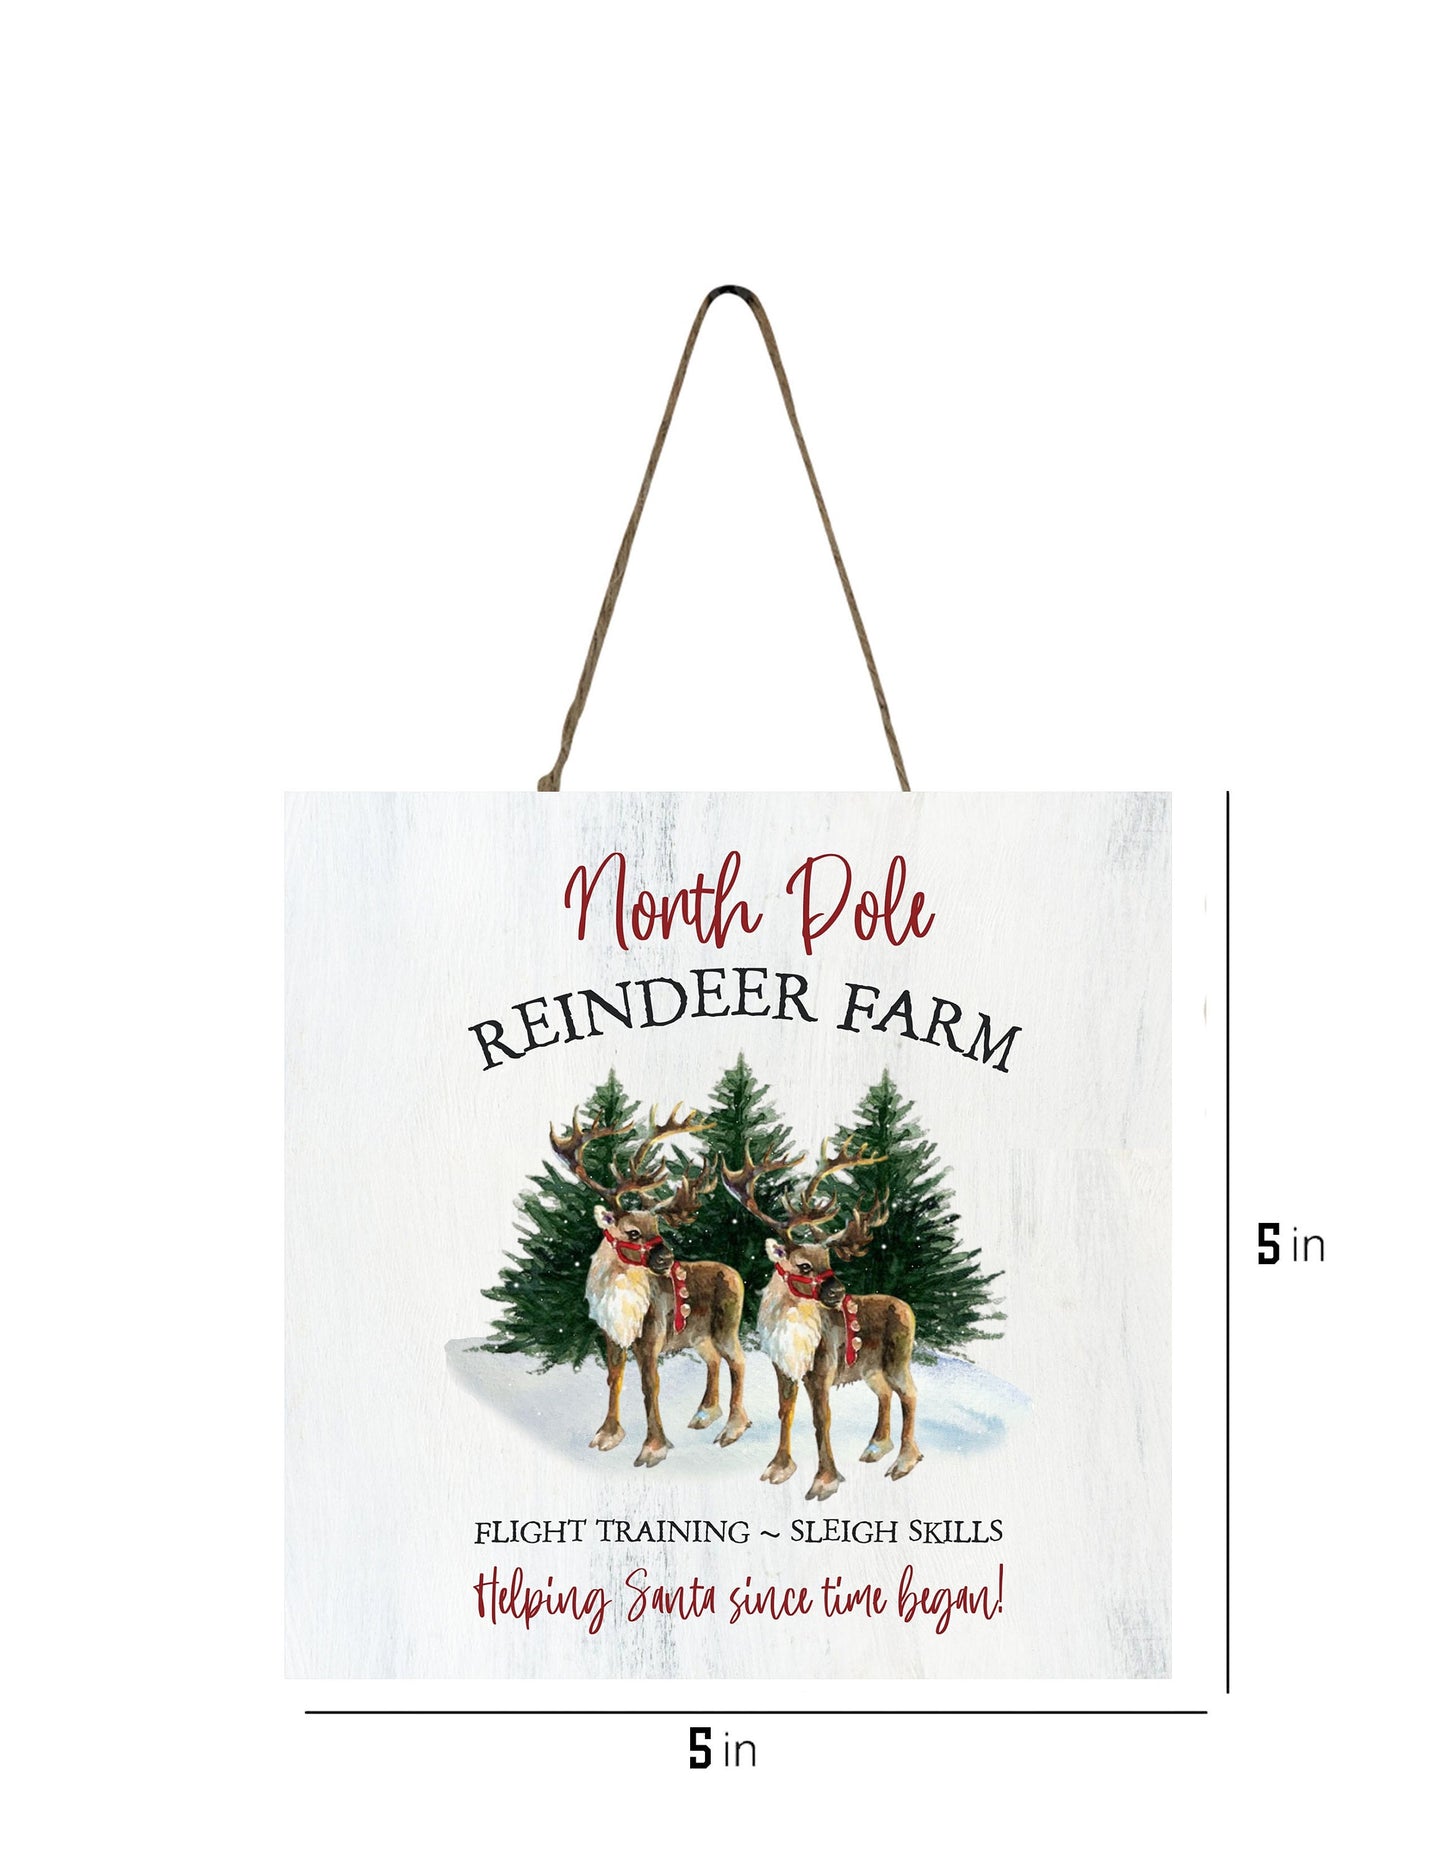 North Pole Reindeer Farm Printed Handmade Wood Christmas Ornament Mini Sign